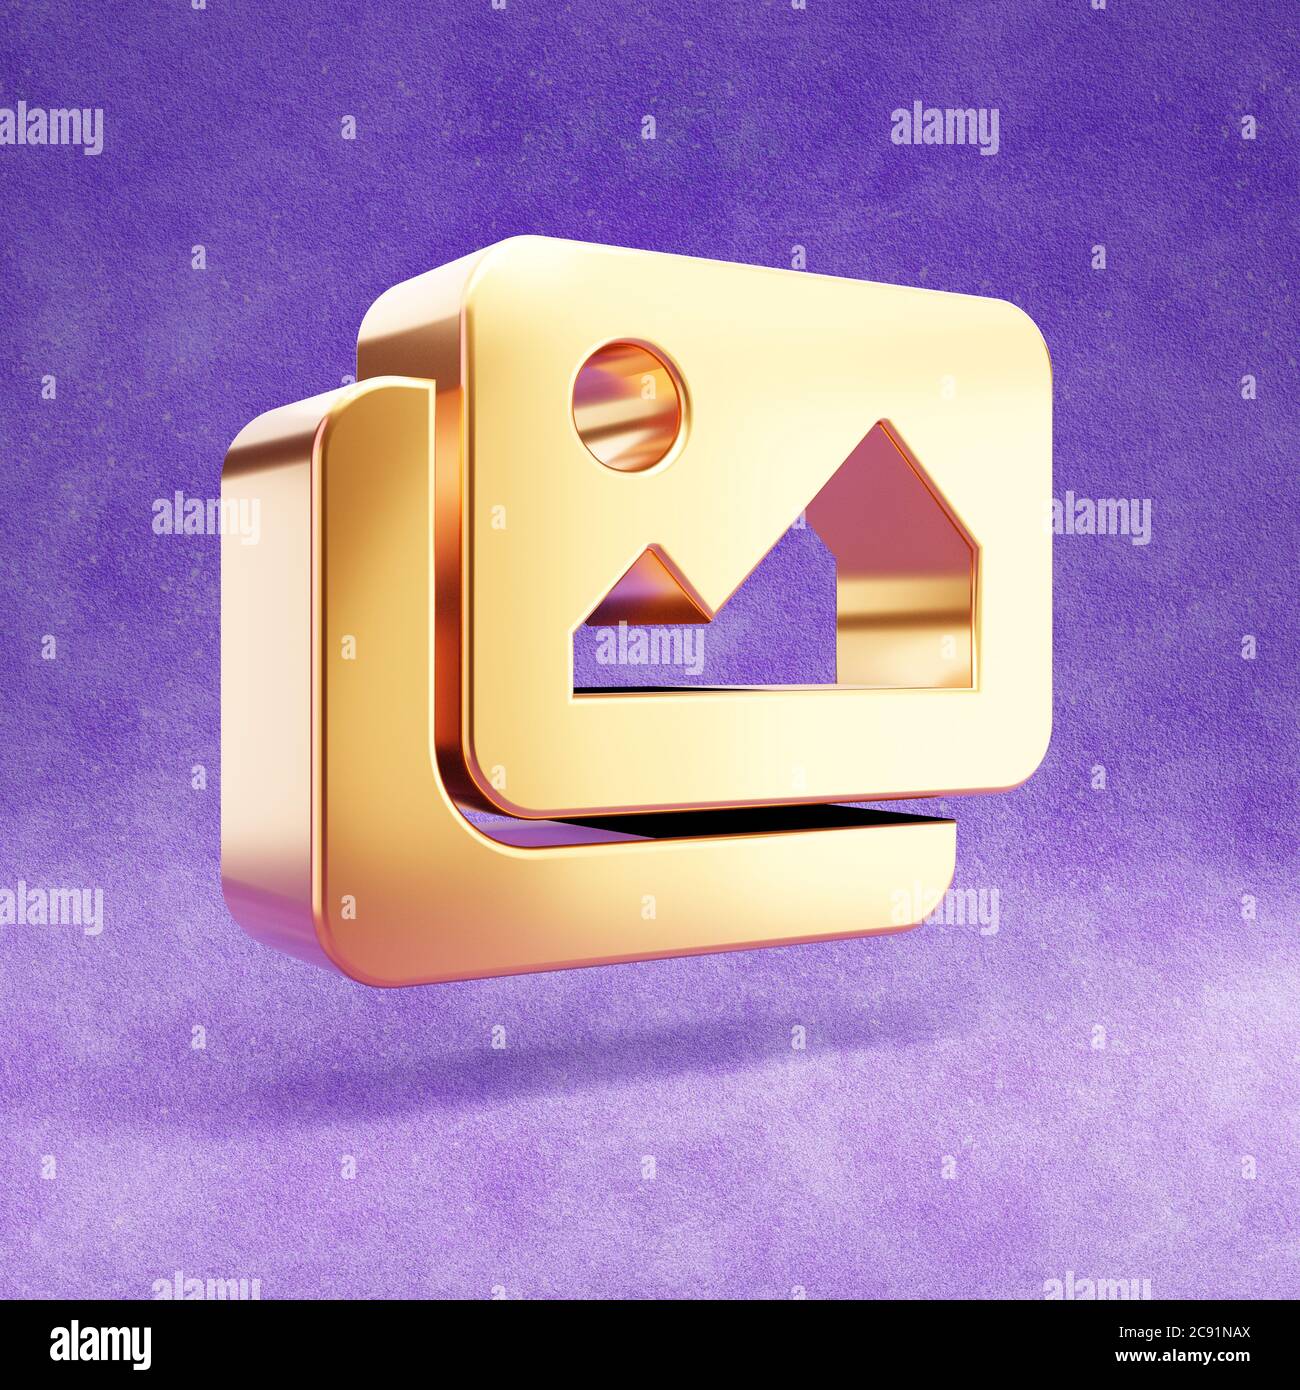 Images icon. Gold glossy Images symbol isolated on violet velvet background. Modern icon for website, social media, presentation, design template element. 3D render. Stock Photo